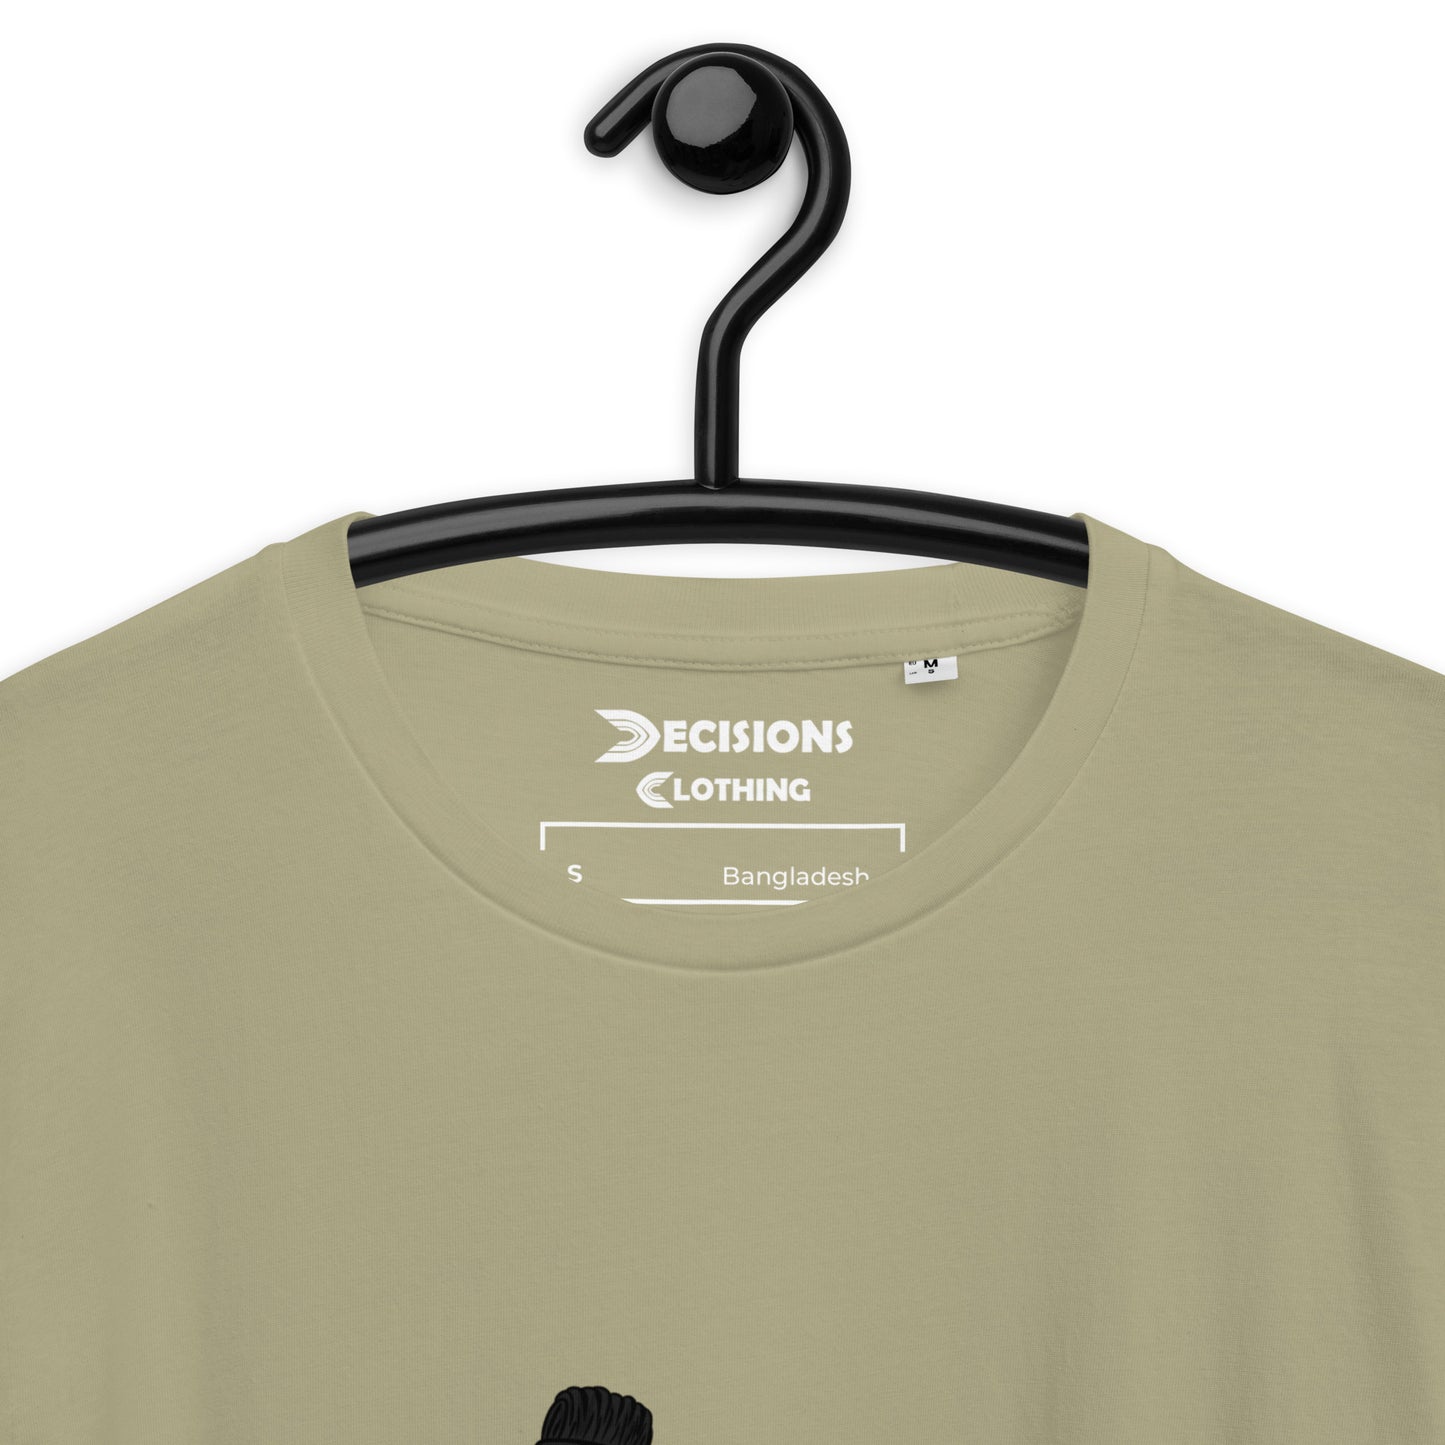 Wraith Nessie T-Shirt (Apex Legends)